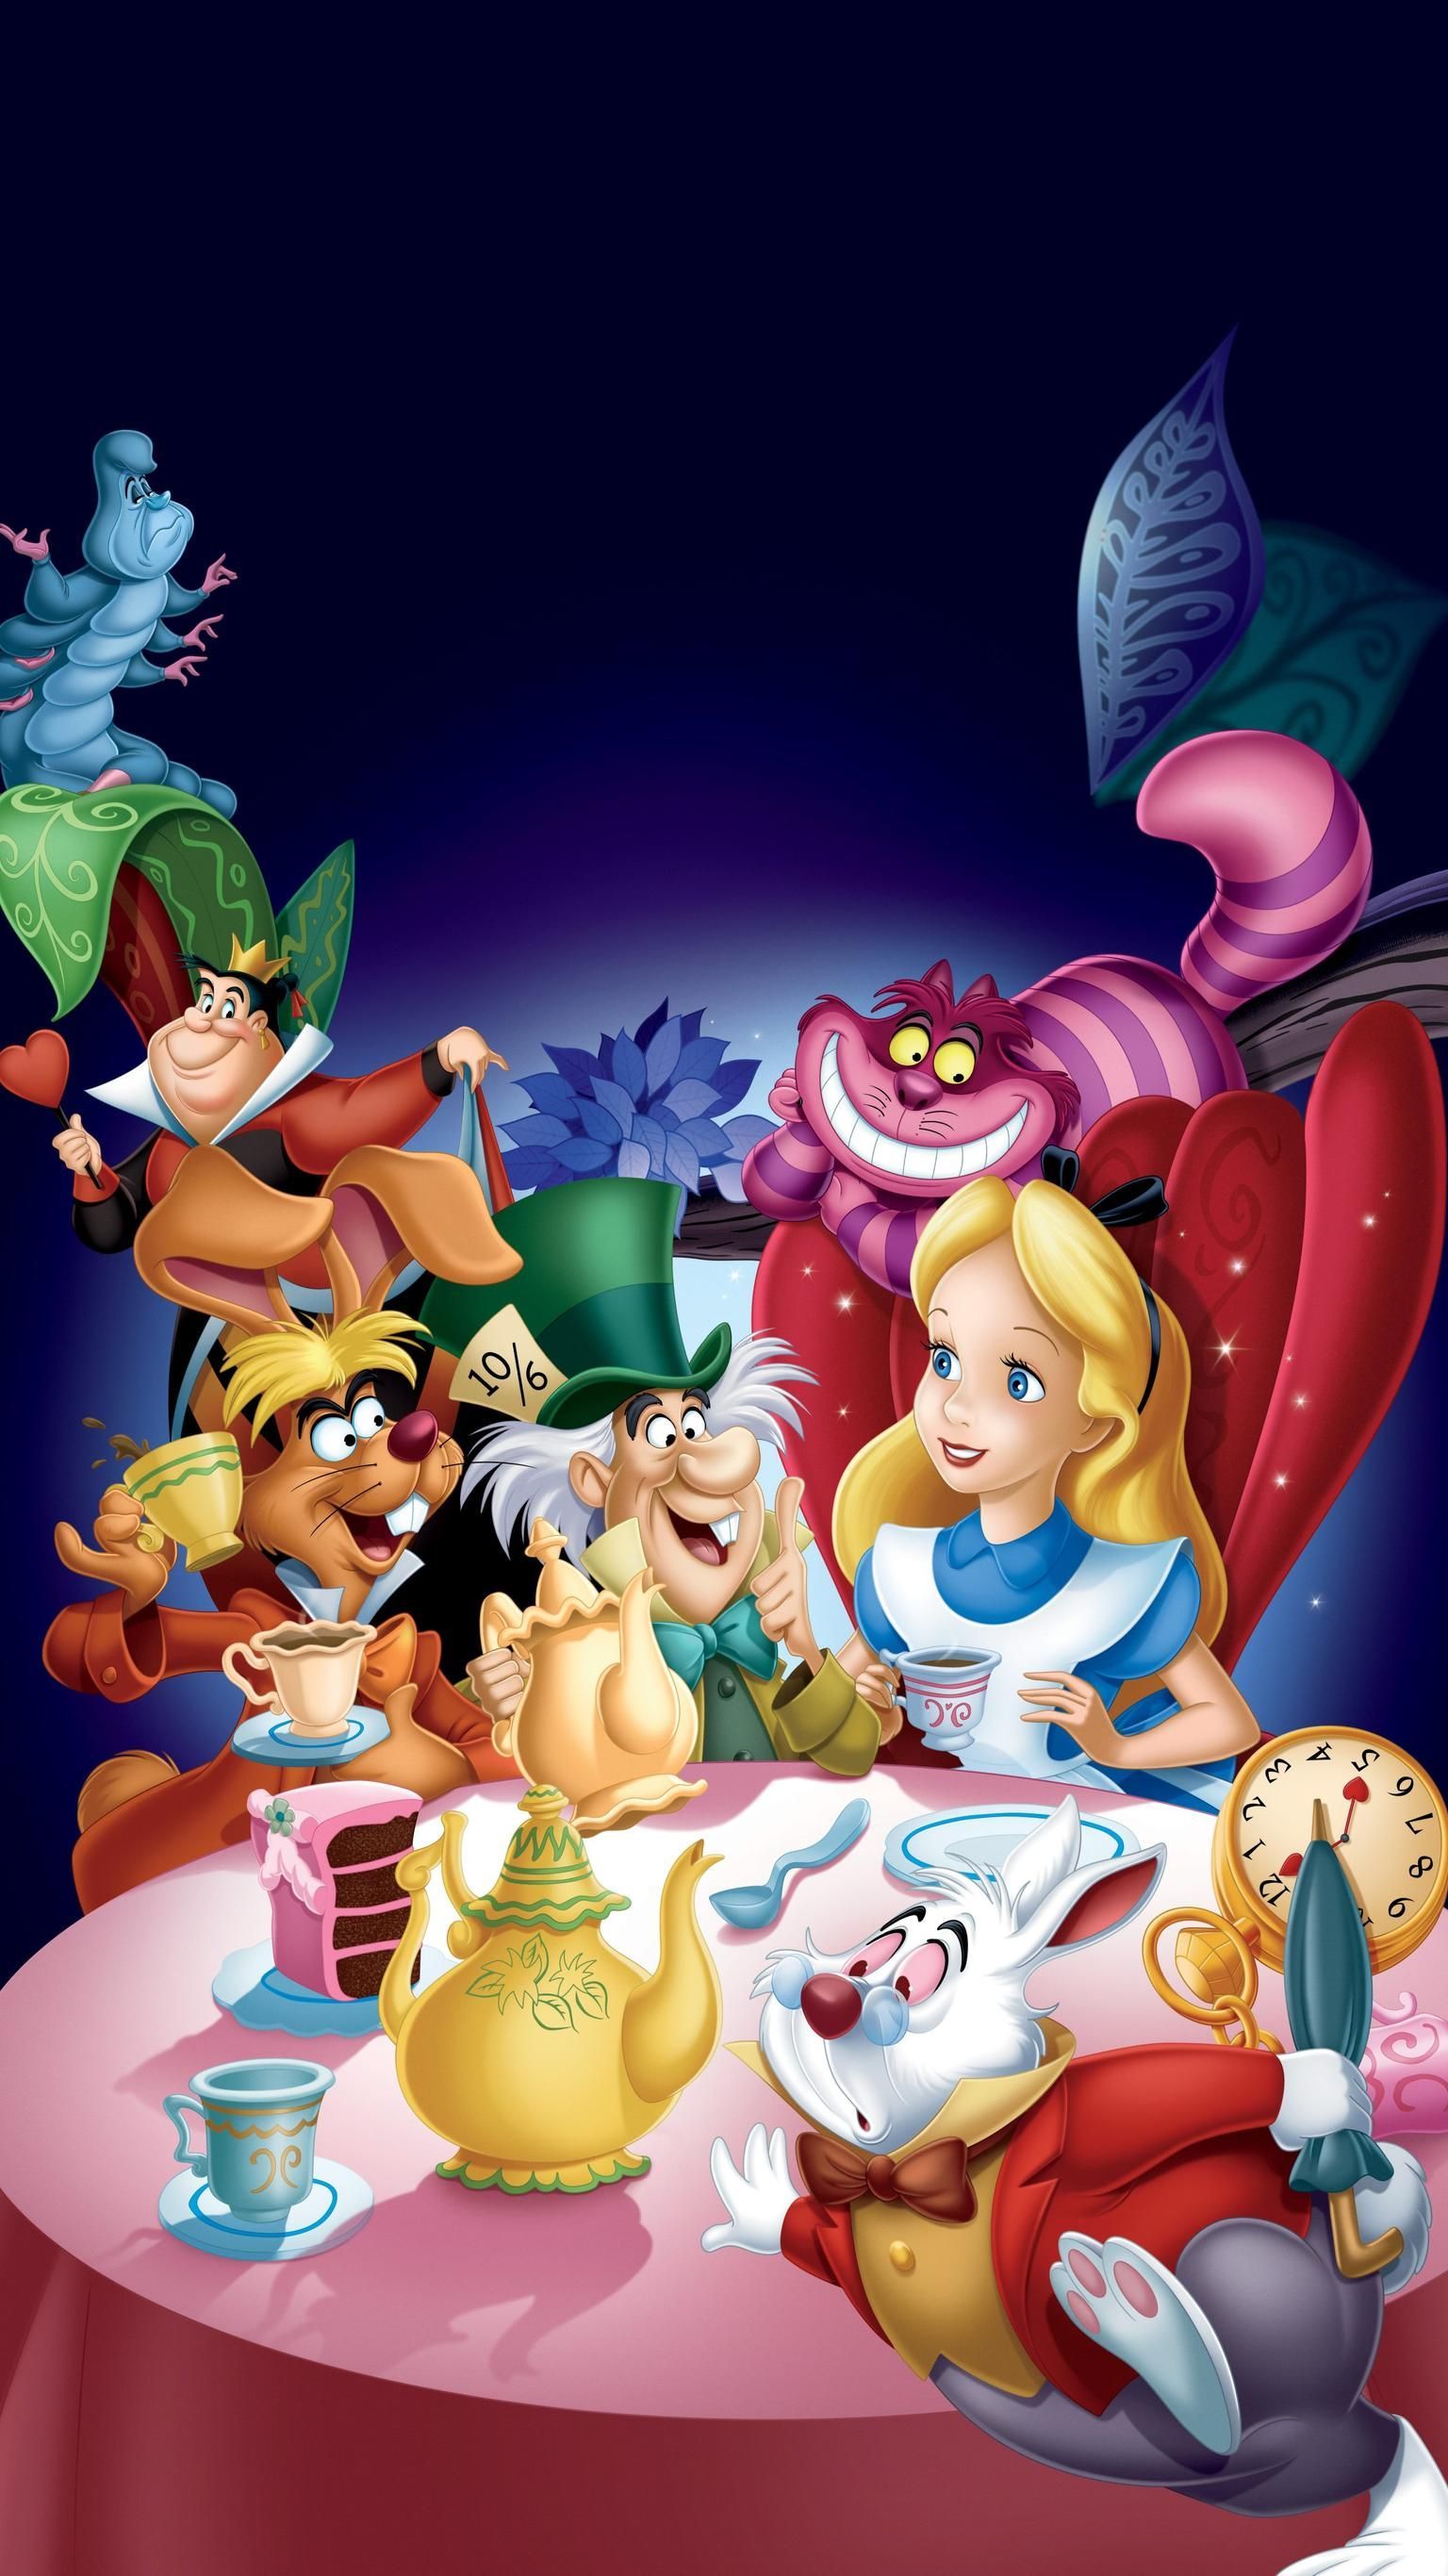 Alice in Wonderland (1951) Phone Wallpaper. Moviemania. Alice in wonderland disney, Alice in wonderland cartoon, Disney alice